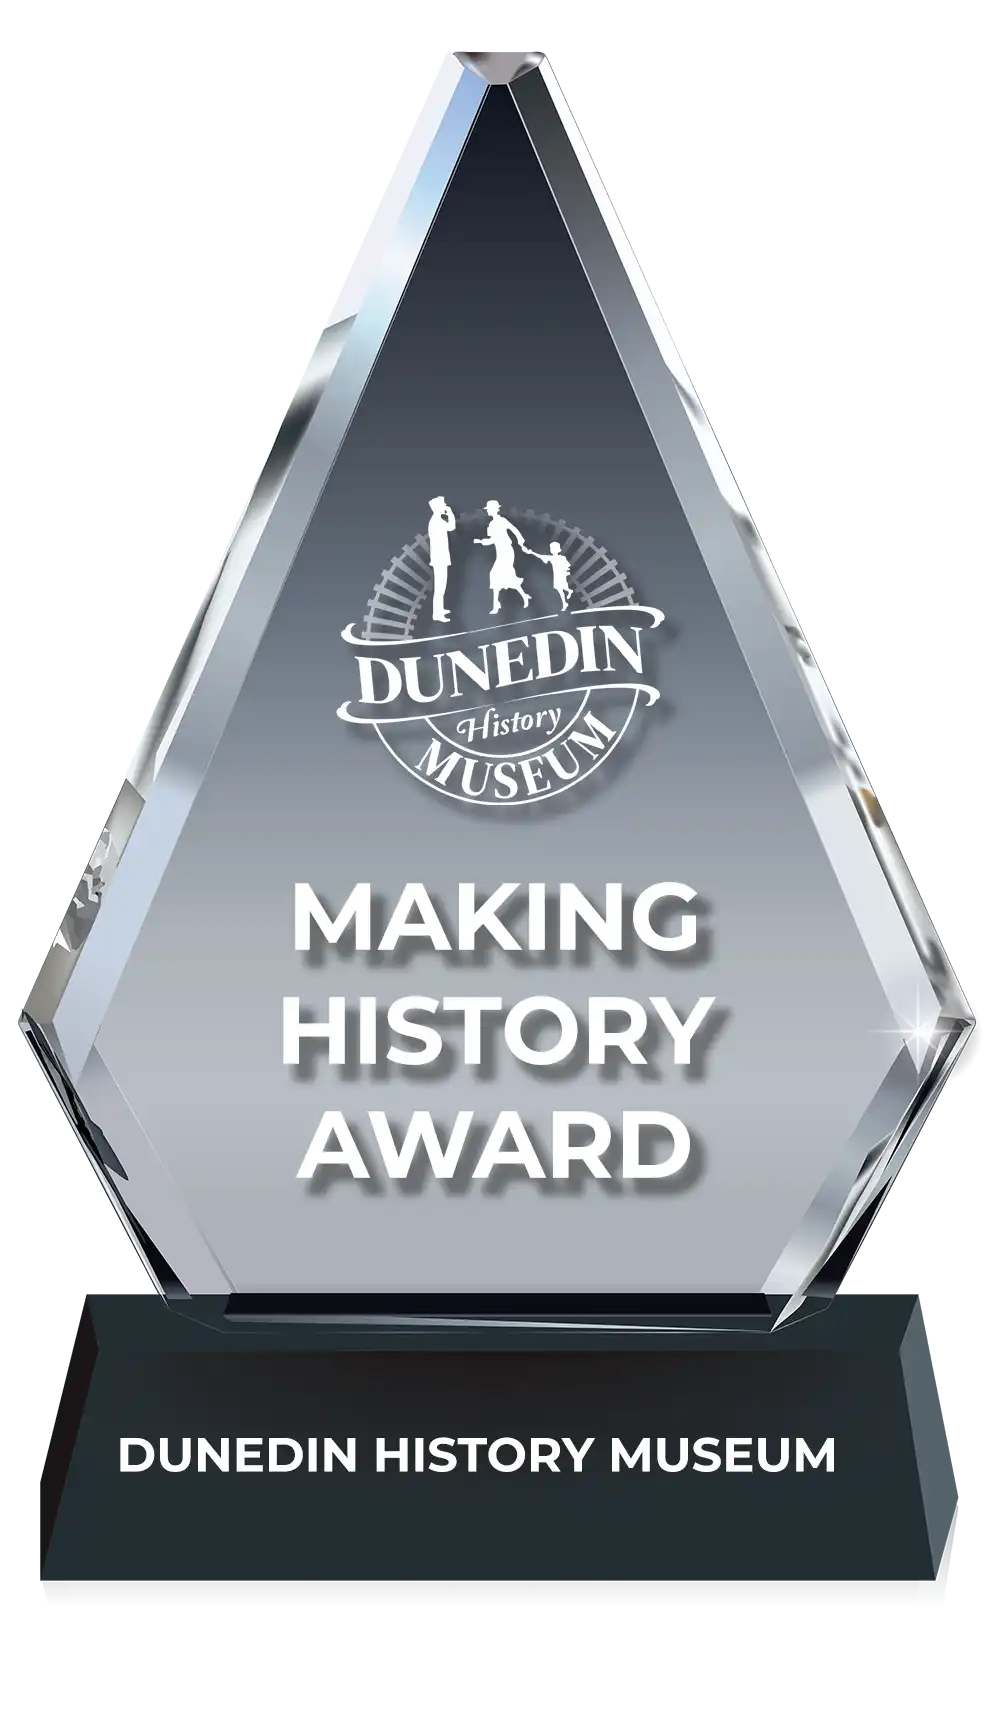 Dunedin History Museum - Making History Award